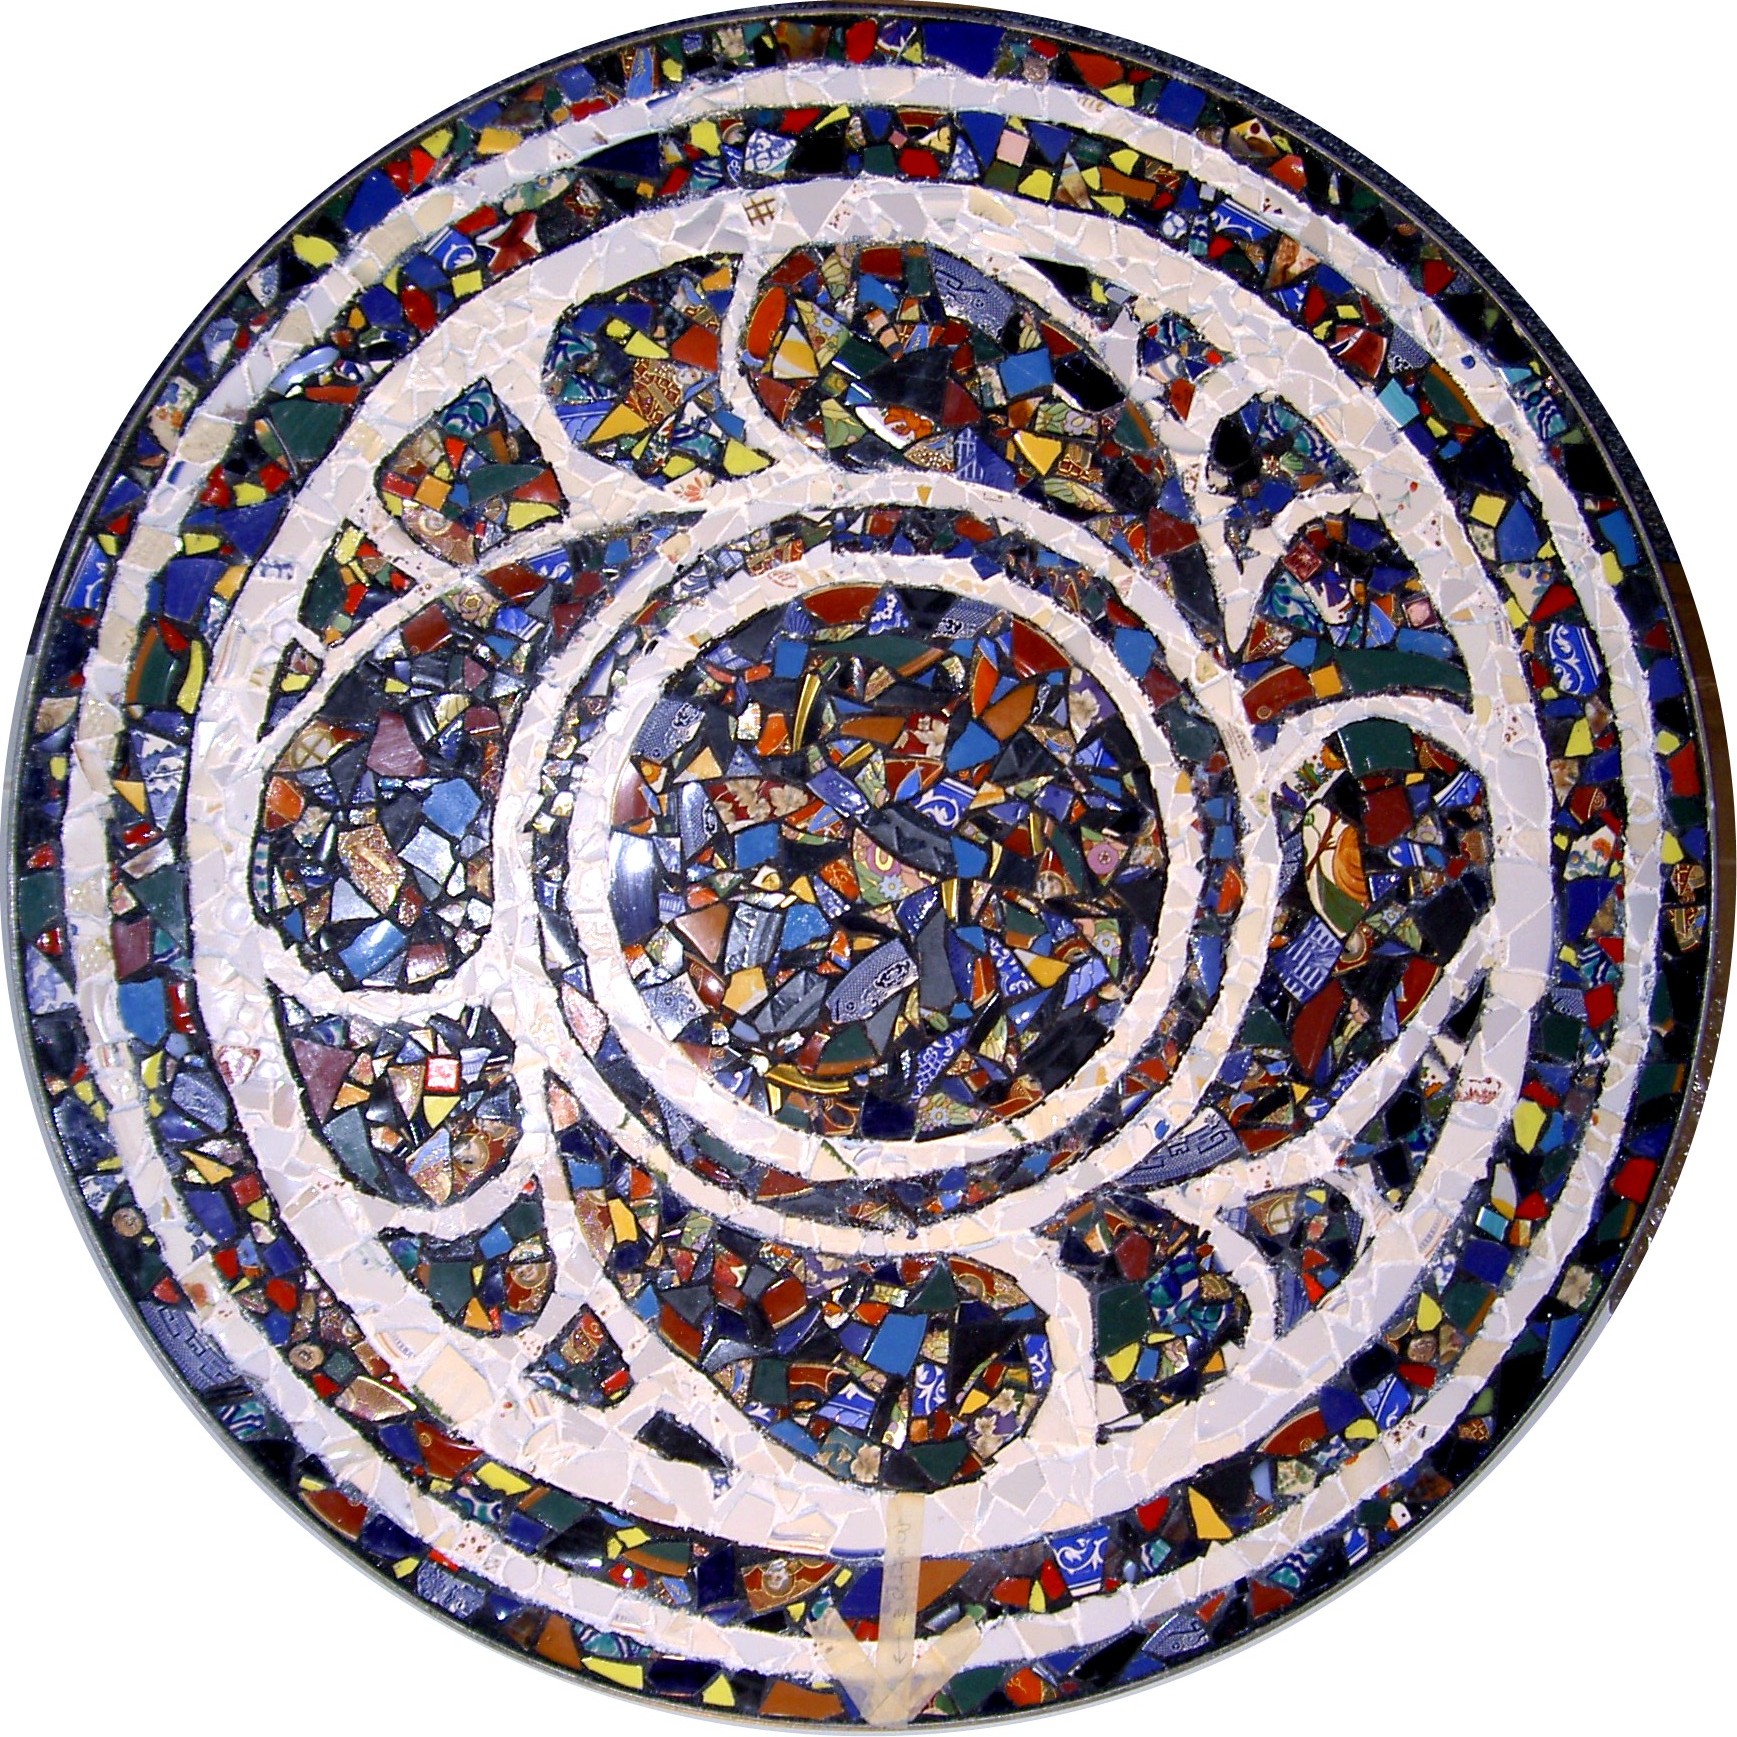 04 Aug Mosaic logo 2